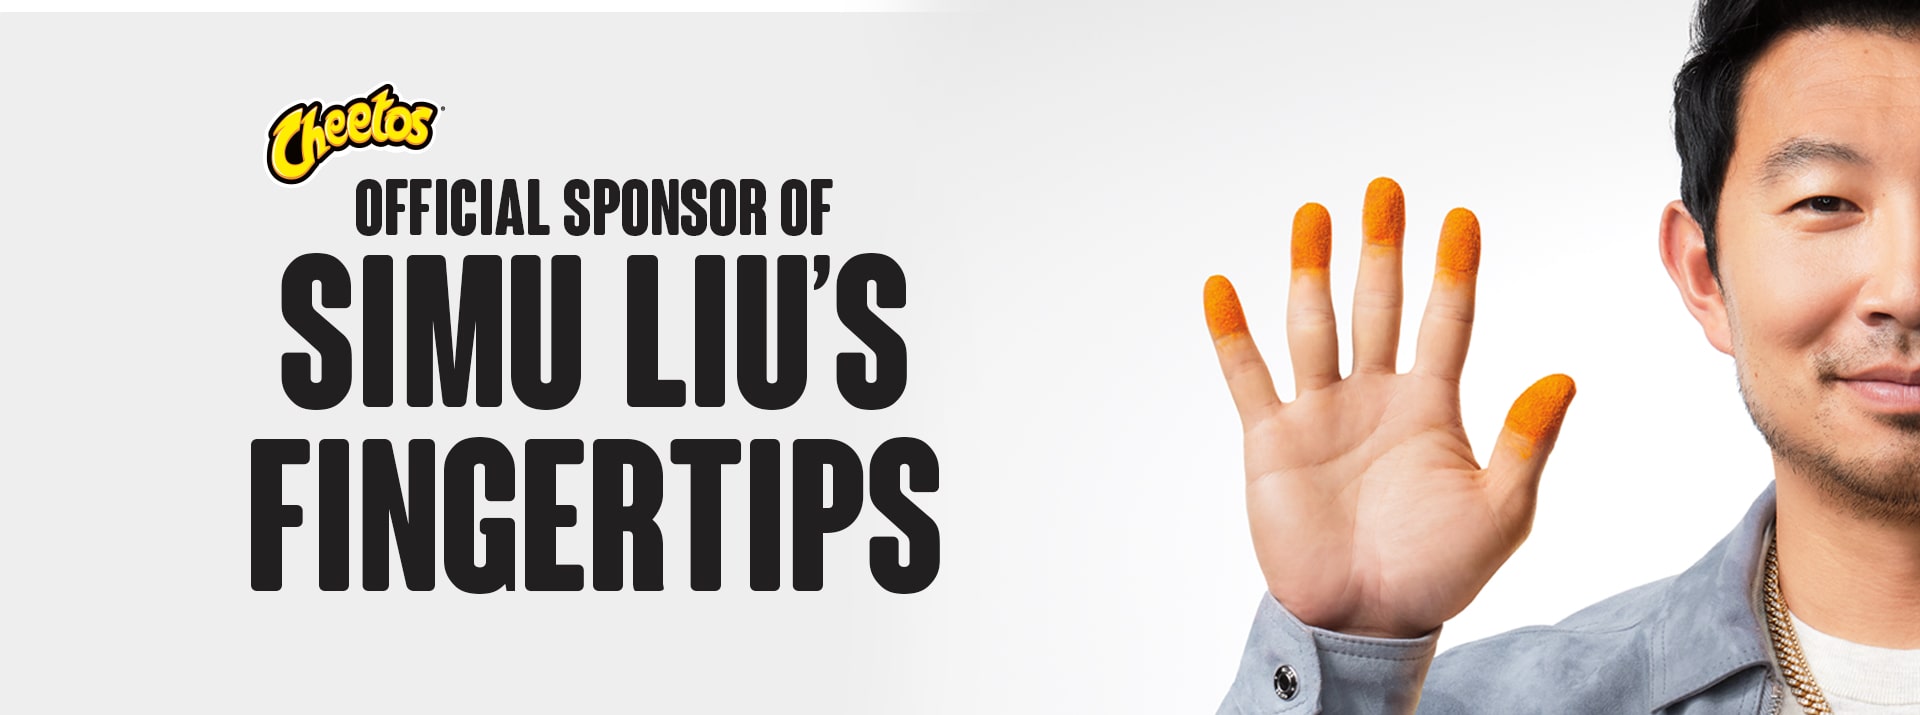 Official sponsor of those Simu Lui's fingertips 